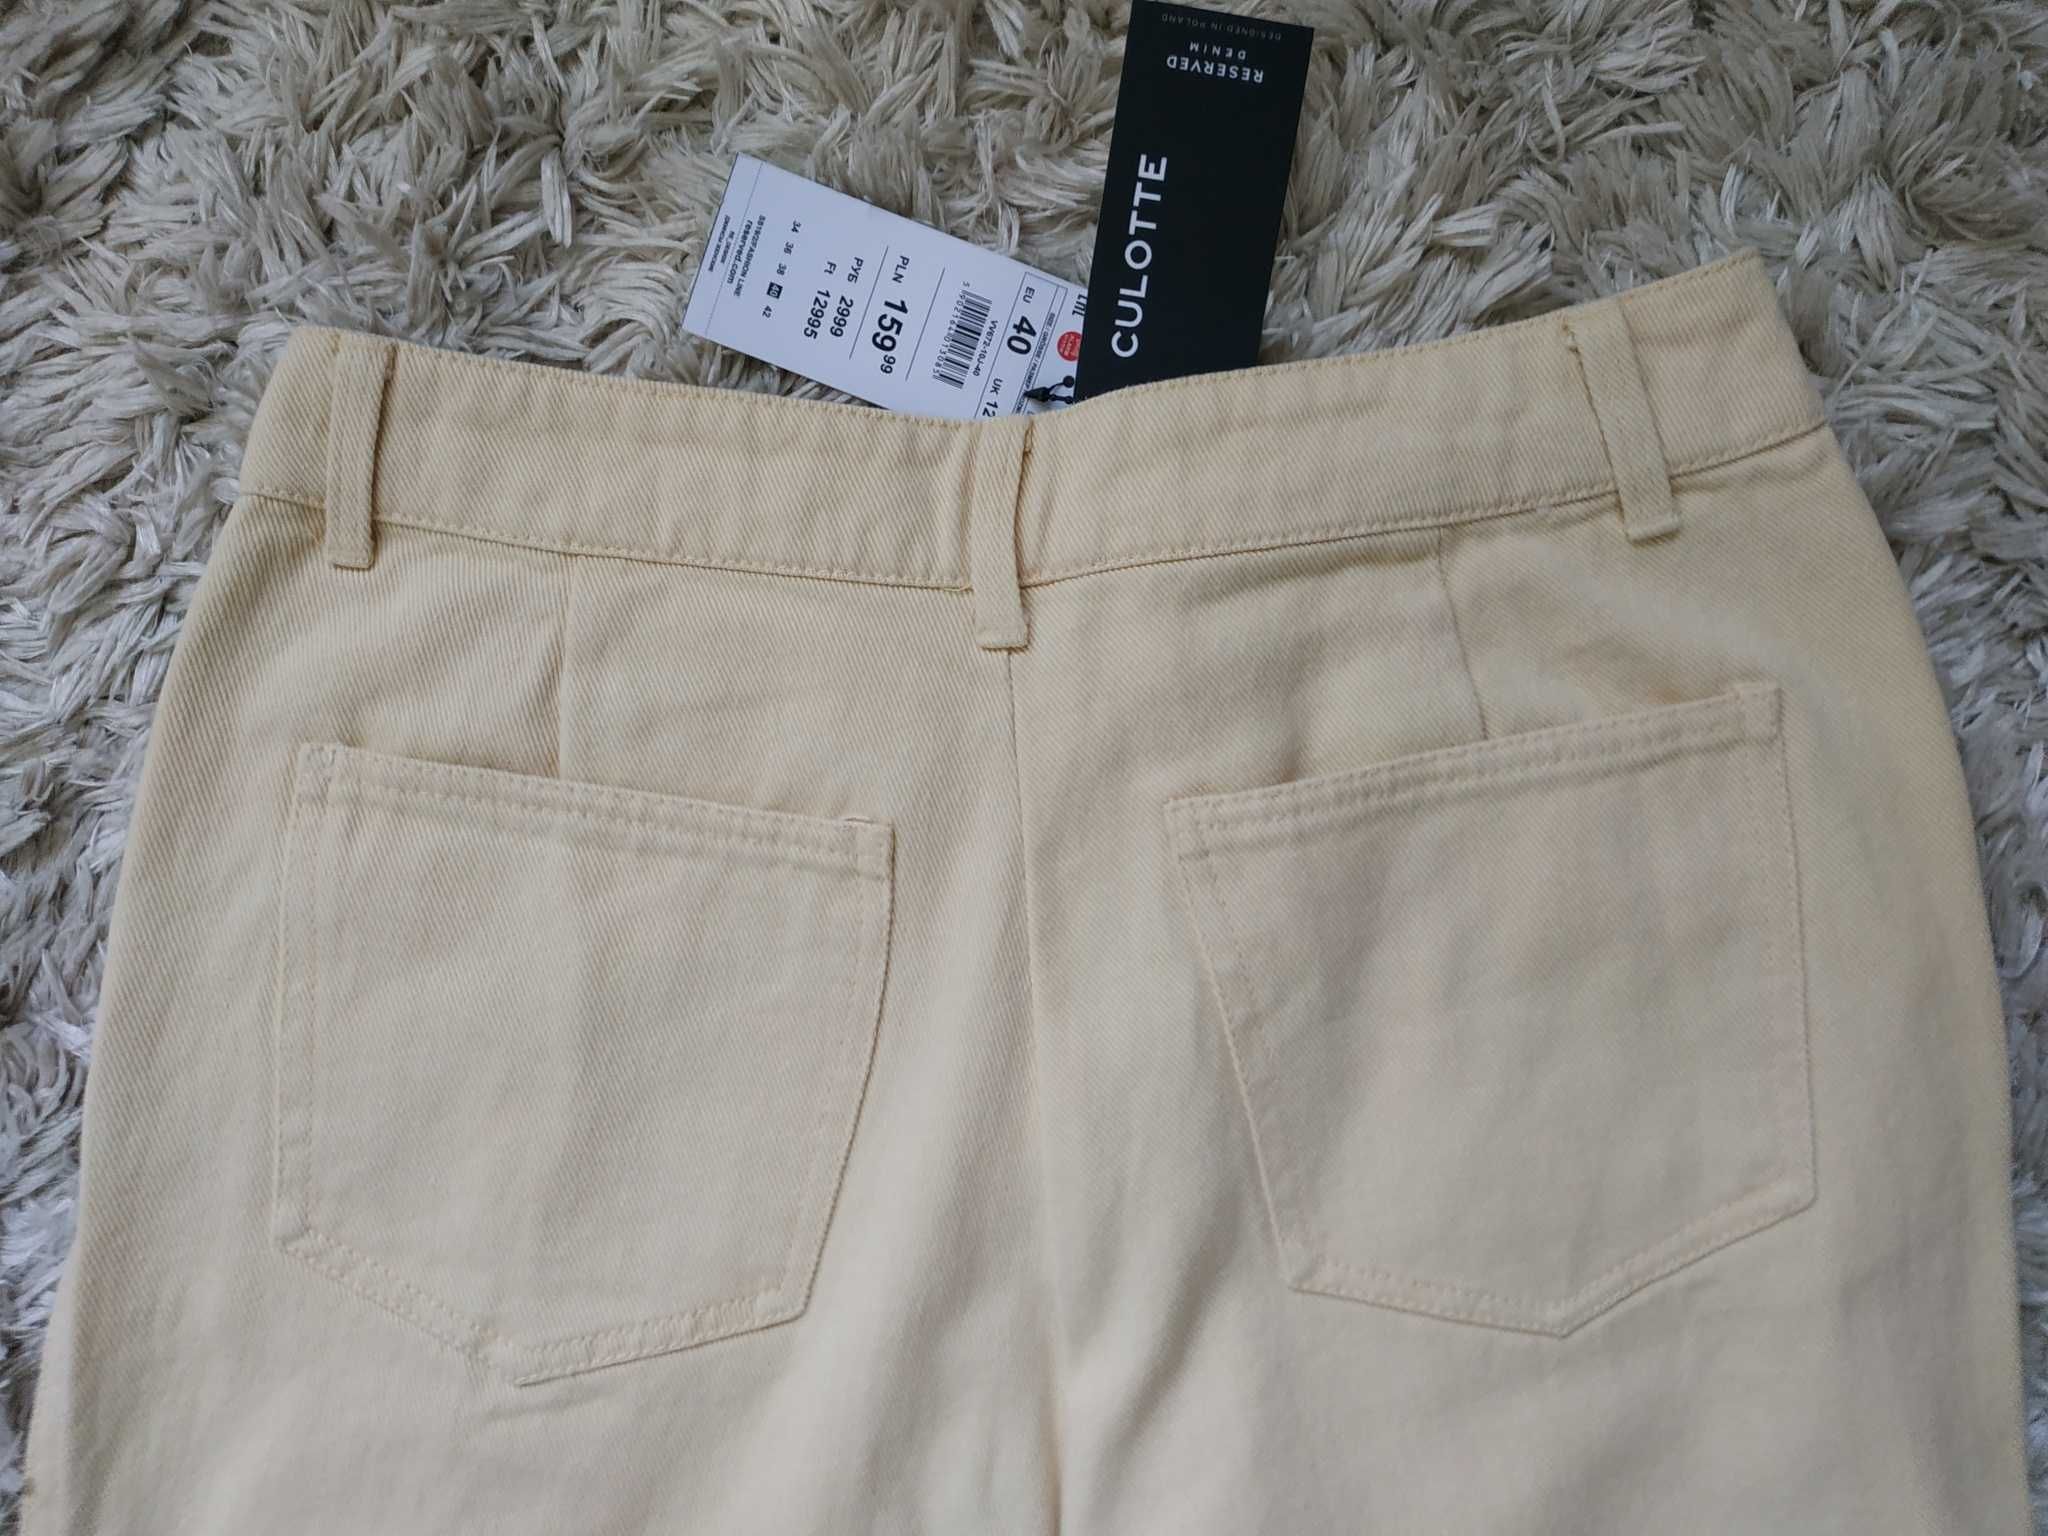 NOWE jeansy RESERVED 40 L spodnie CULOTTE kolor jasnożółty nogawka 7/8